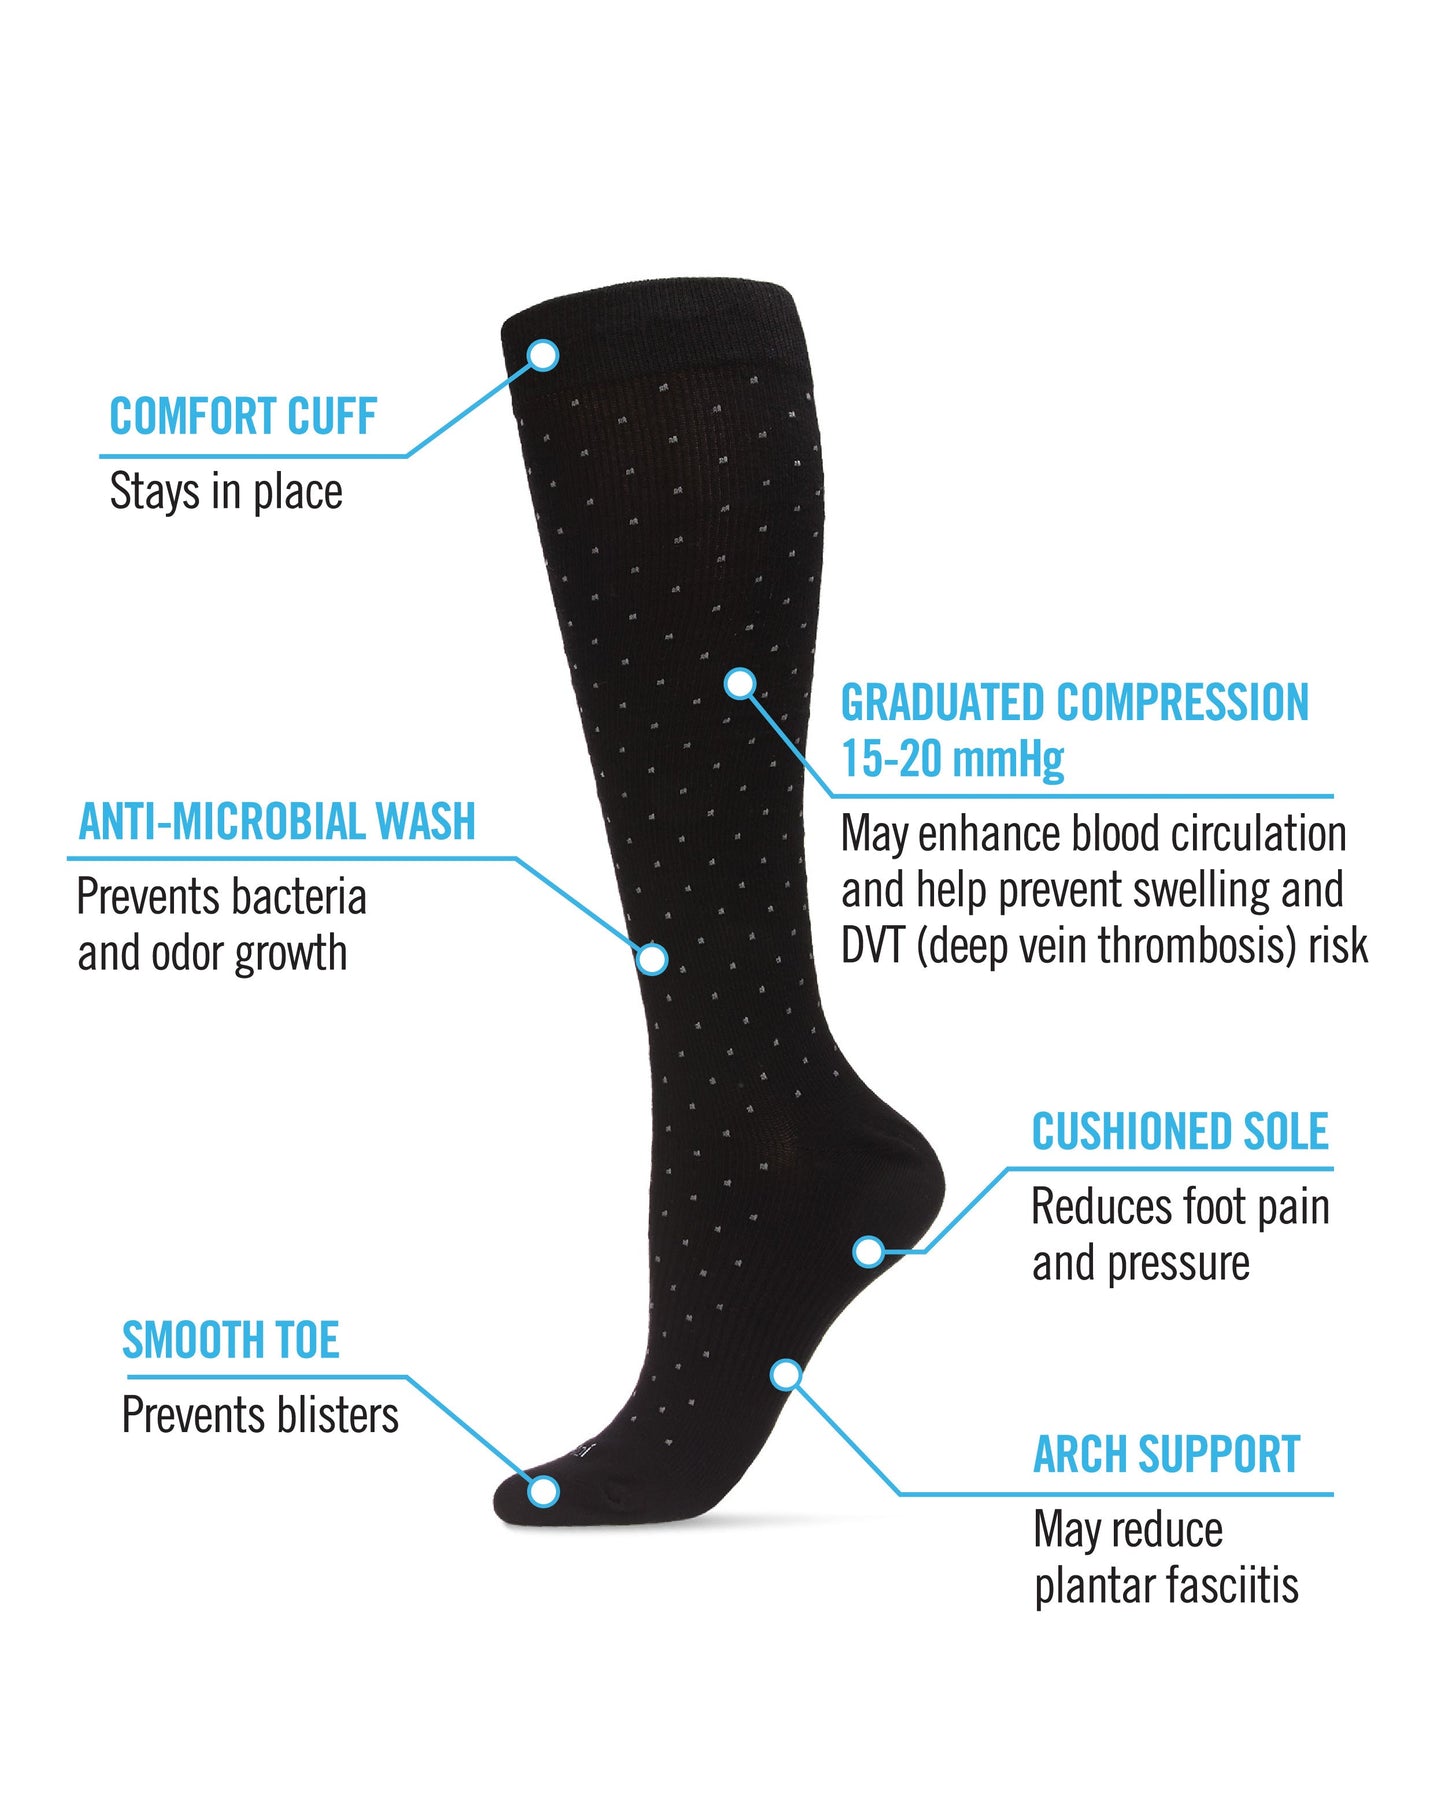 Unisex Swiss Dot Cotton Blend 15-20mmHg Graduated Compression Socks